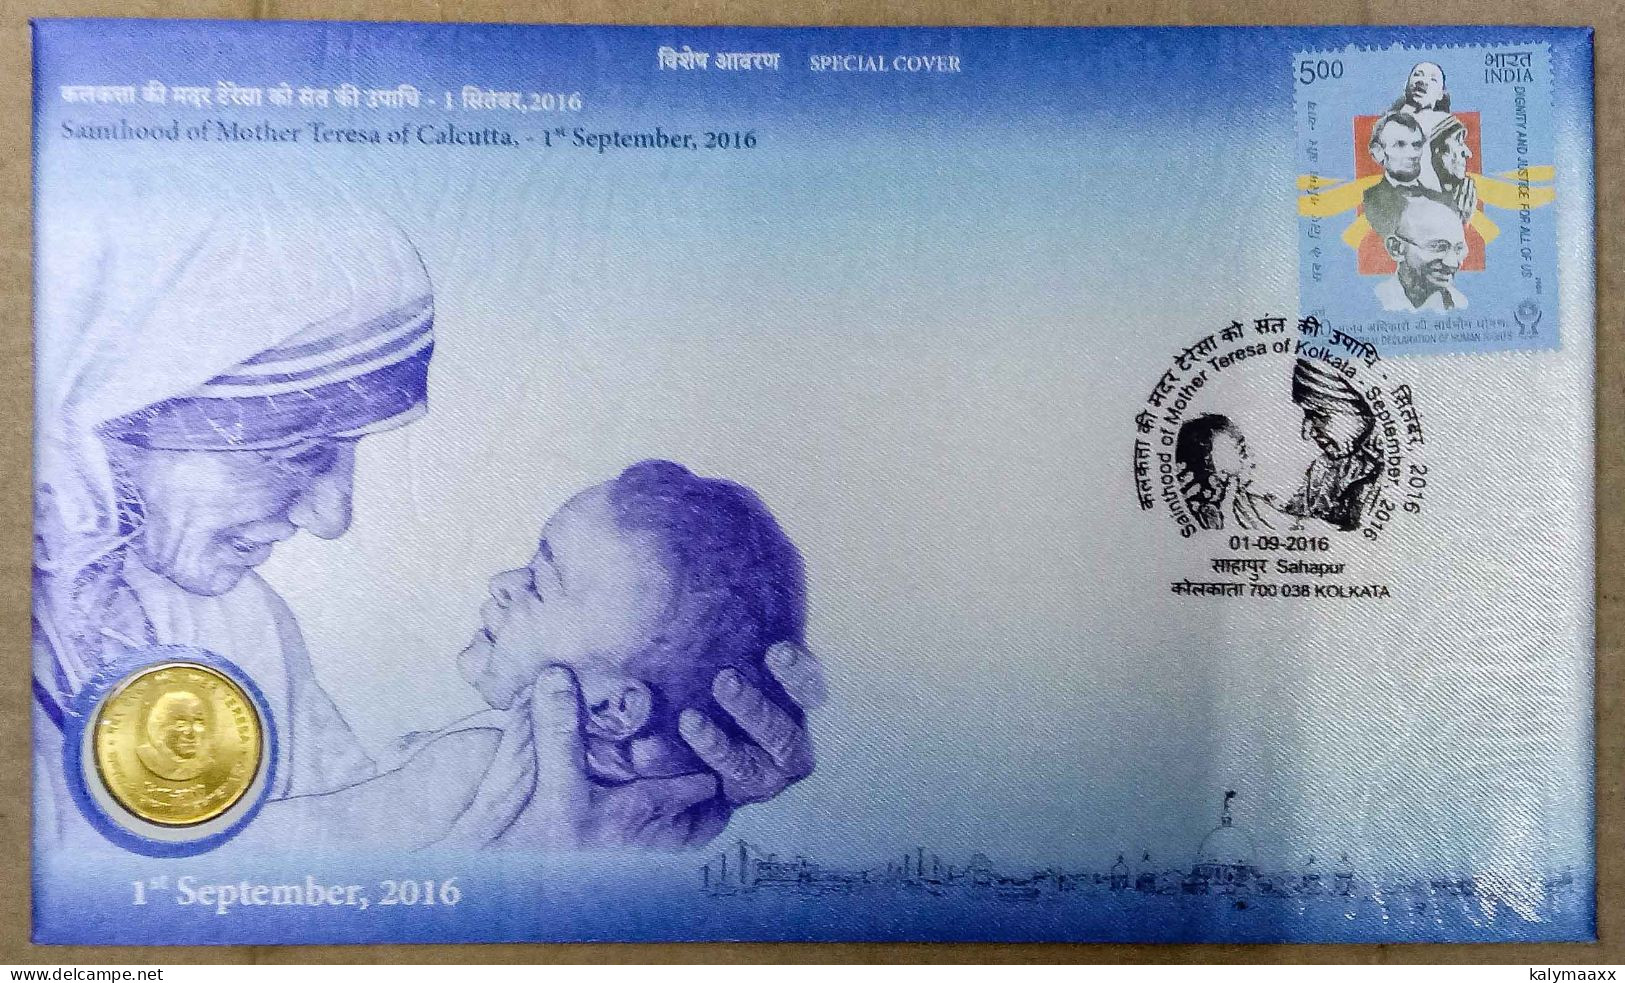 INDIA 2016 SAINTHOOD OF MOTHER TERESA, SPECIAL COIN COVER OF MOTHER TERESA, SPECIAL COVER, LIMITED ISSUE - Moeder Teresa